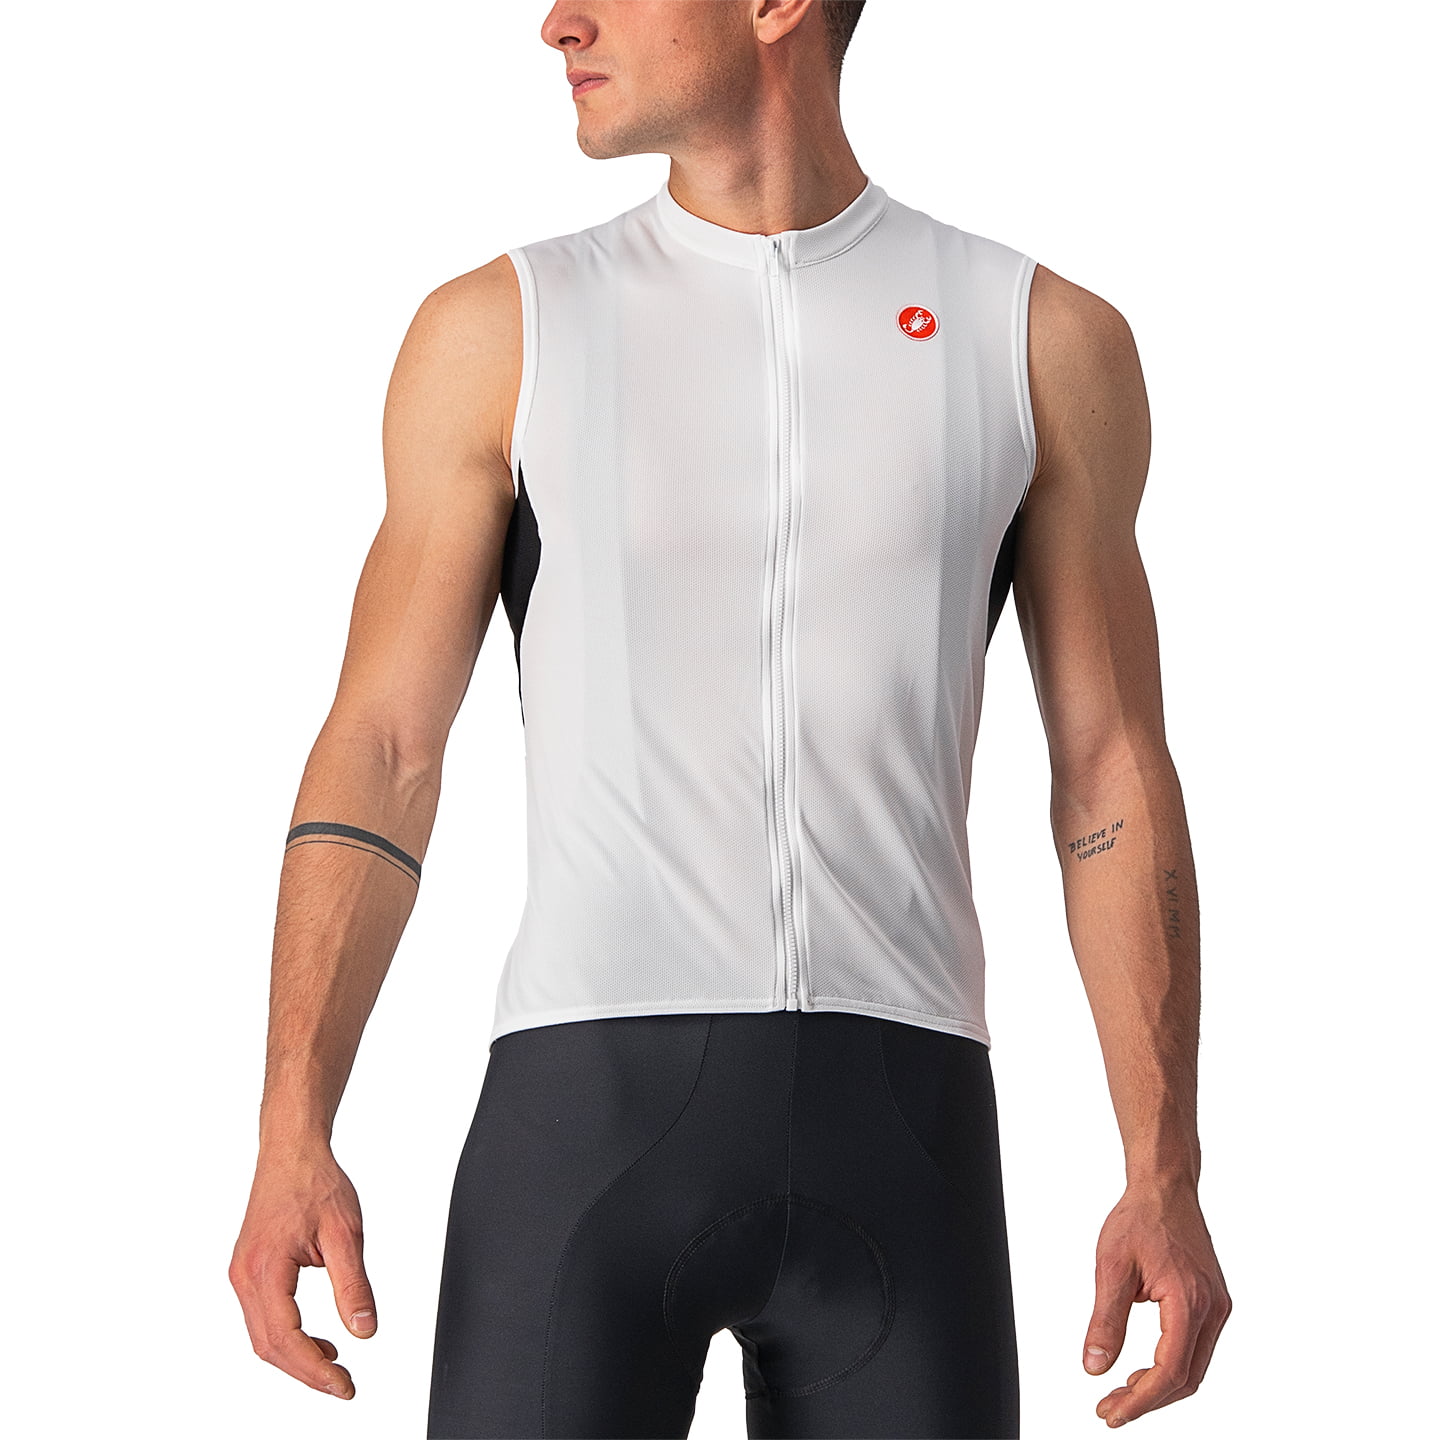 Entrata VI Sleeveless Cycling Jersey Sleeveless Jersey, for men, size S, Cycling jersey, Cycling clothing